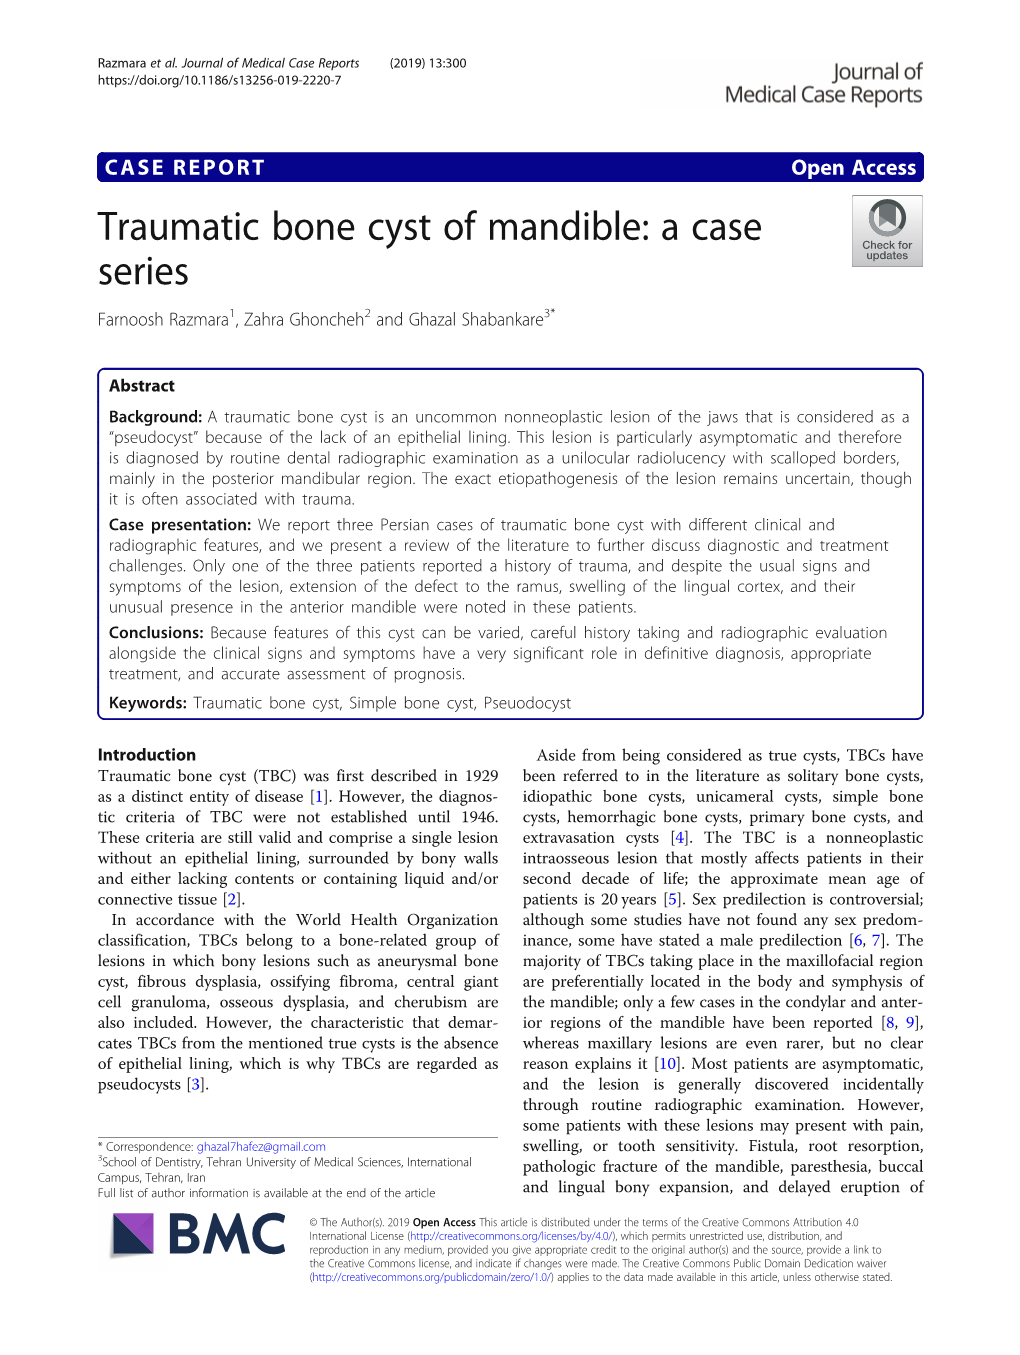 Traumatic Bone Cyst of Mandible: a Case Series Farnoosh Razmara1, Zahra Ghoncheh2 and Ghazal Shabankare3*